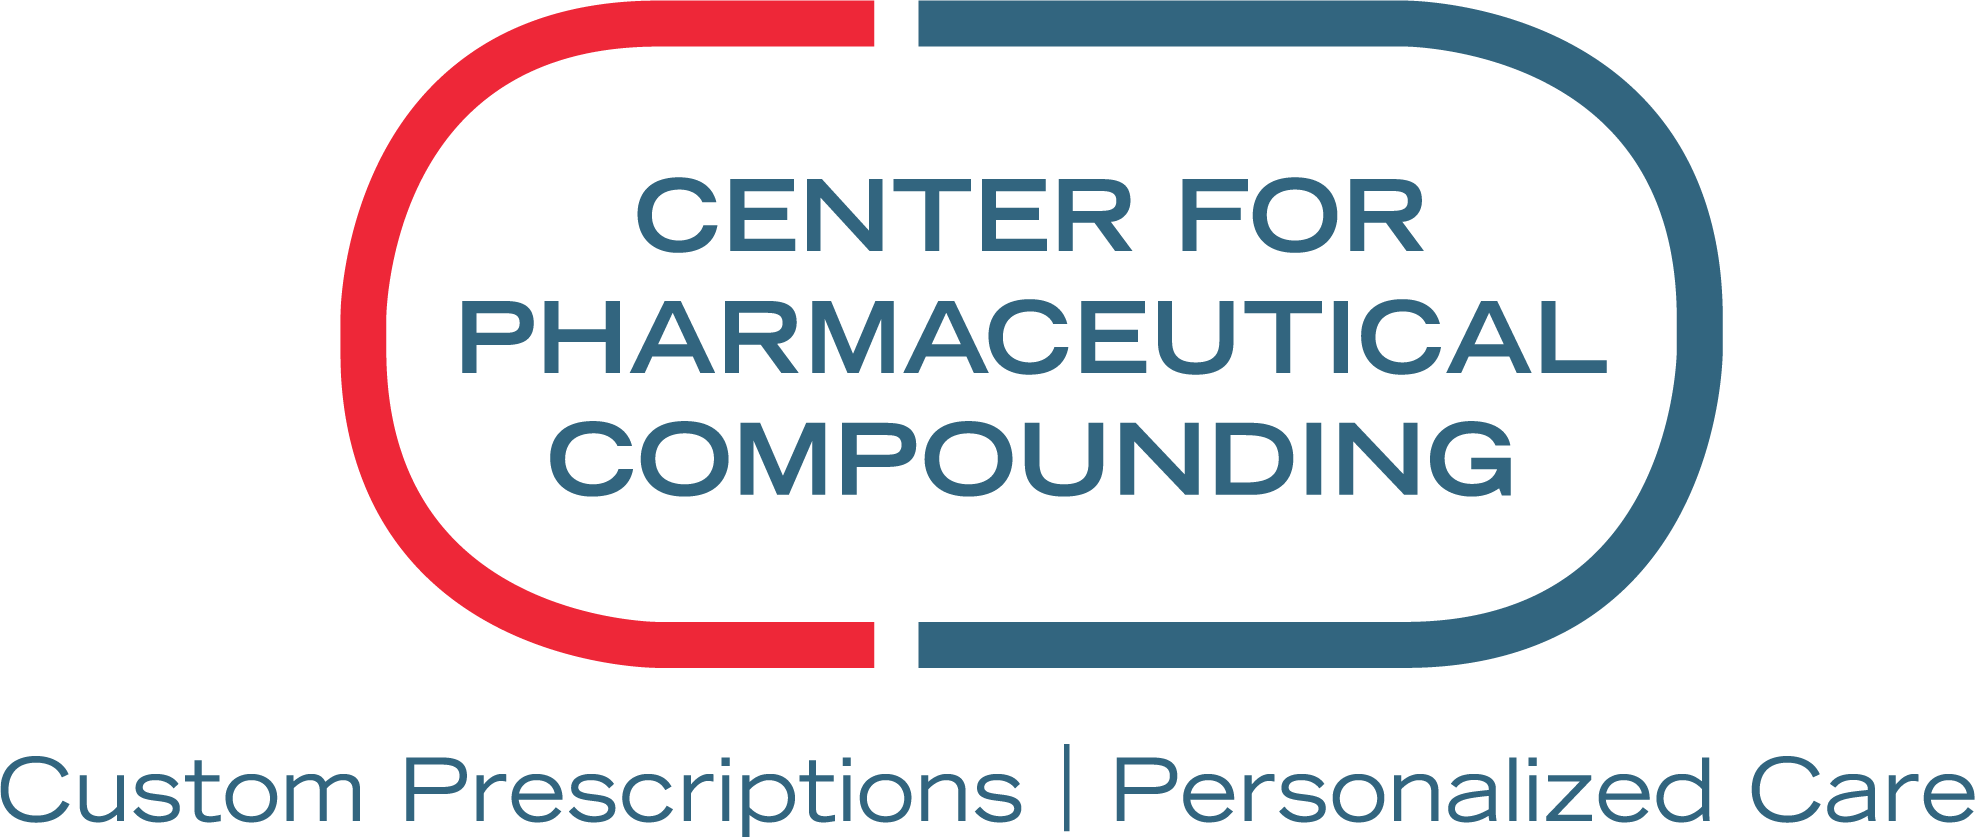 Center for Pharmaceutical Compounding 